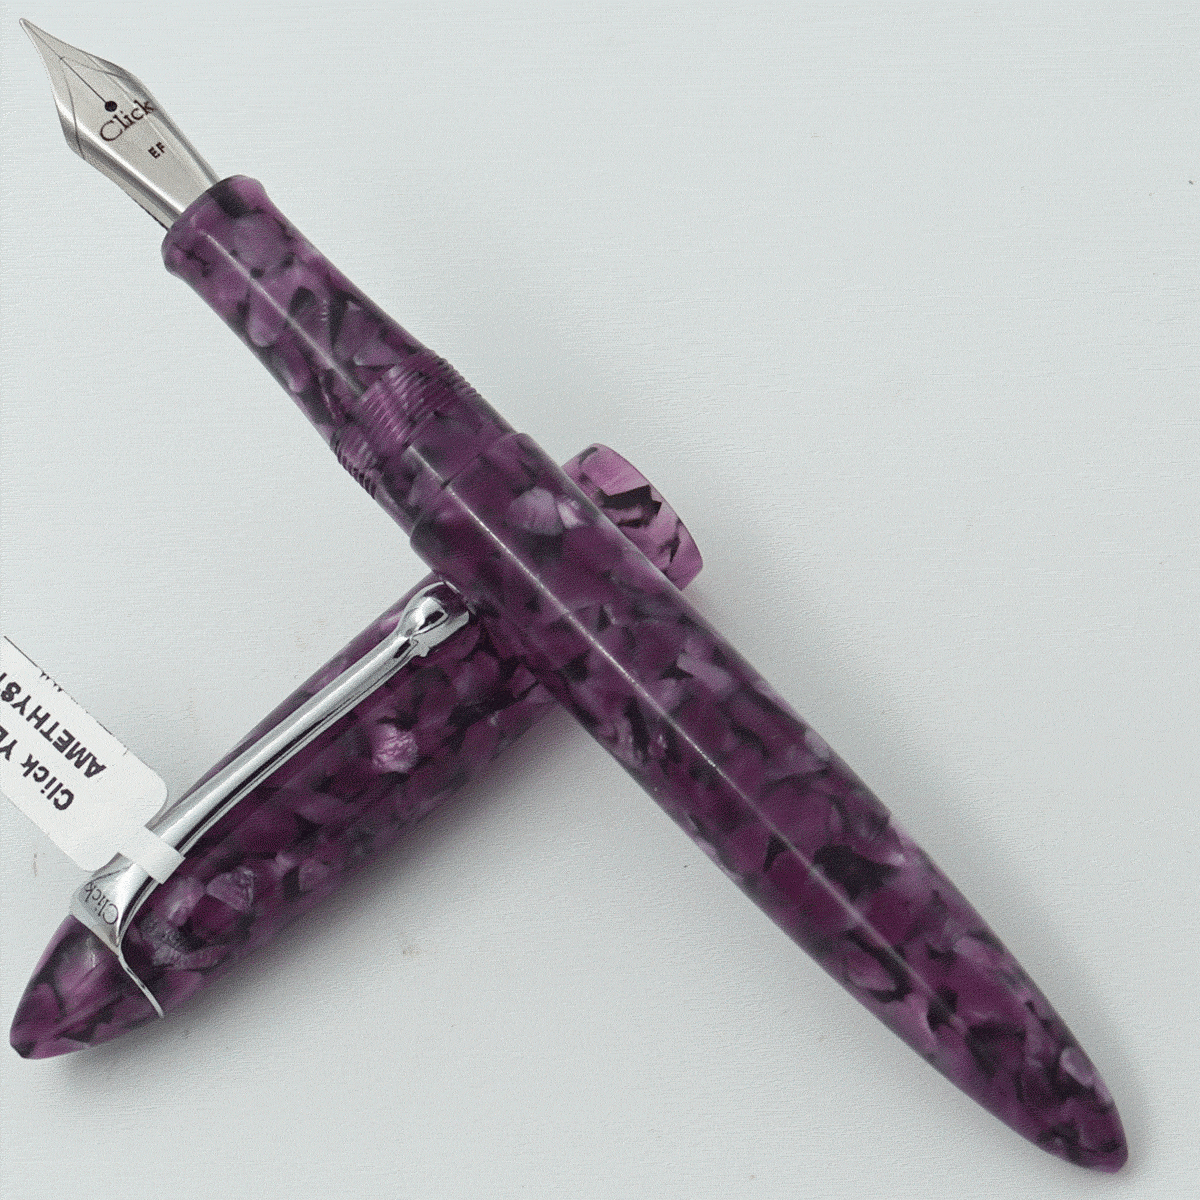 Click YEN AMETHYST Lavender With Black Color Acrylic Body And Cap Silver Color Clip No 35 EF Nib  Eye Dropper Model Fountain Pen (3 in 1) (Nib Can be Customised) SKU 24014